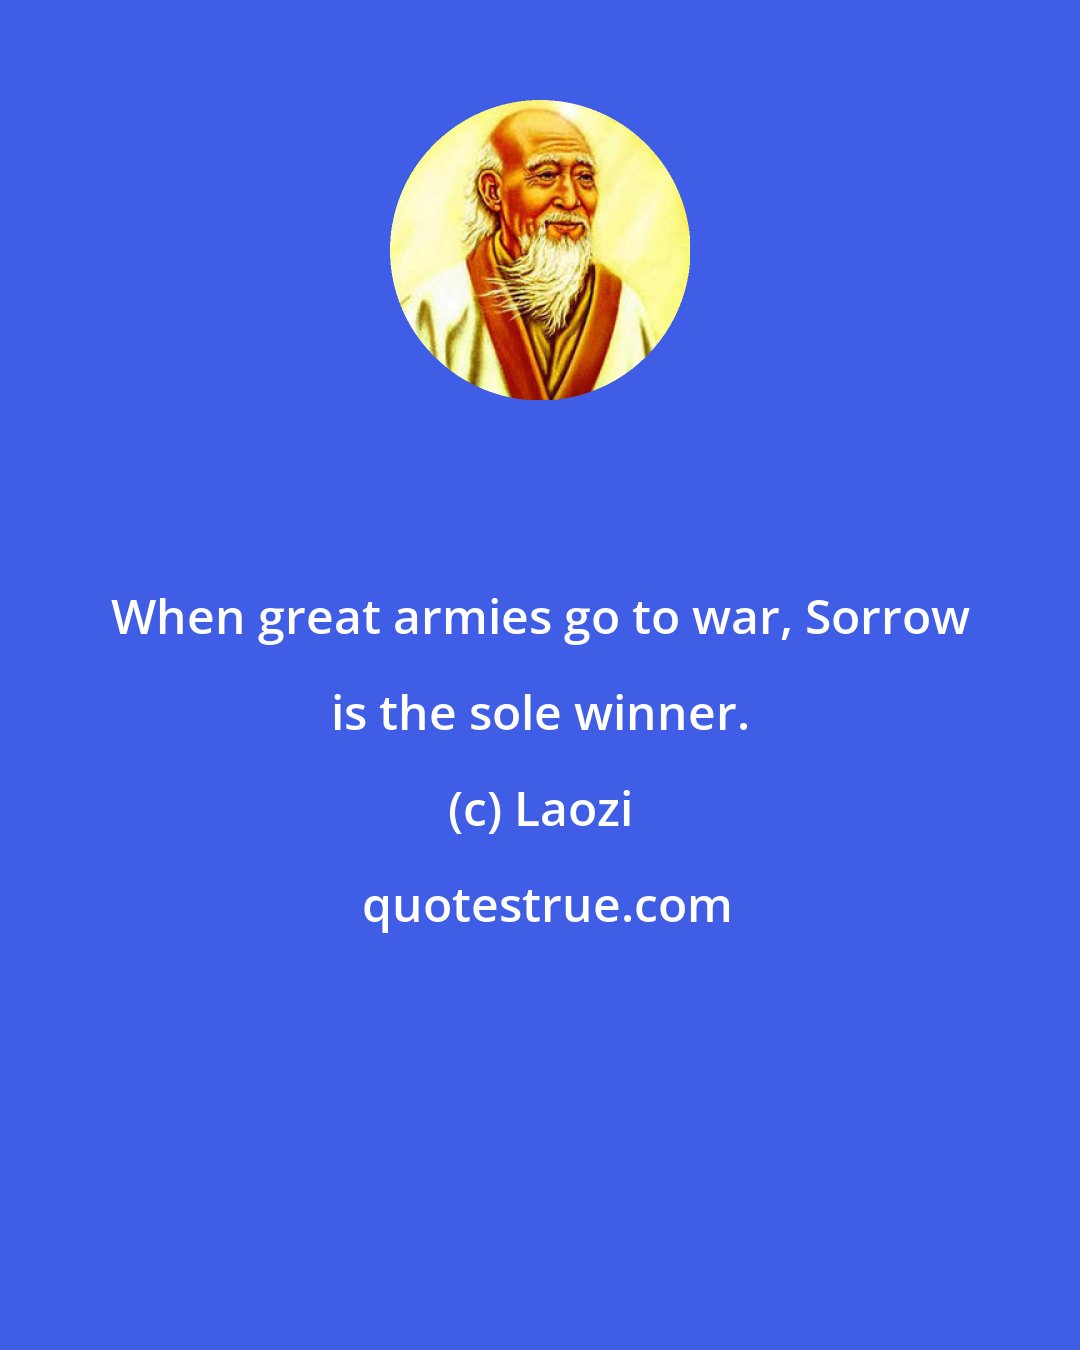 Laozi: When great armies go to war, Sorrow is the sole winner.